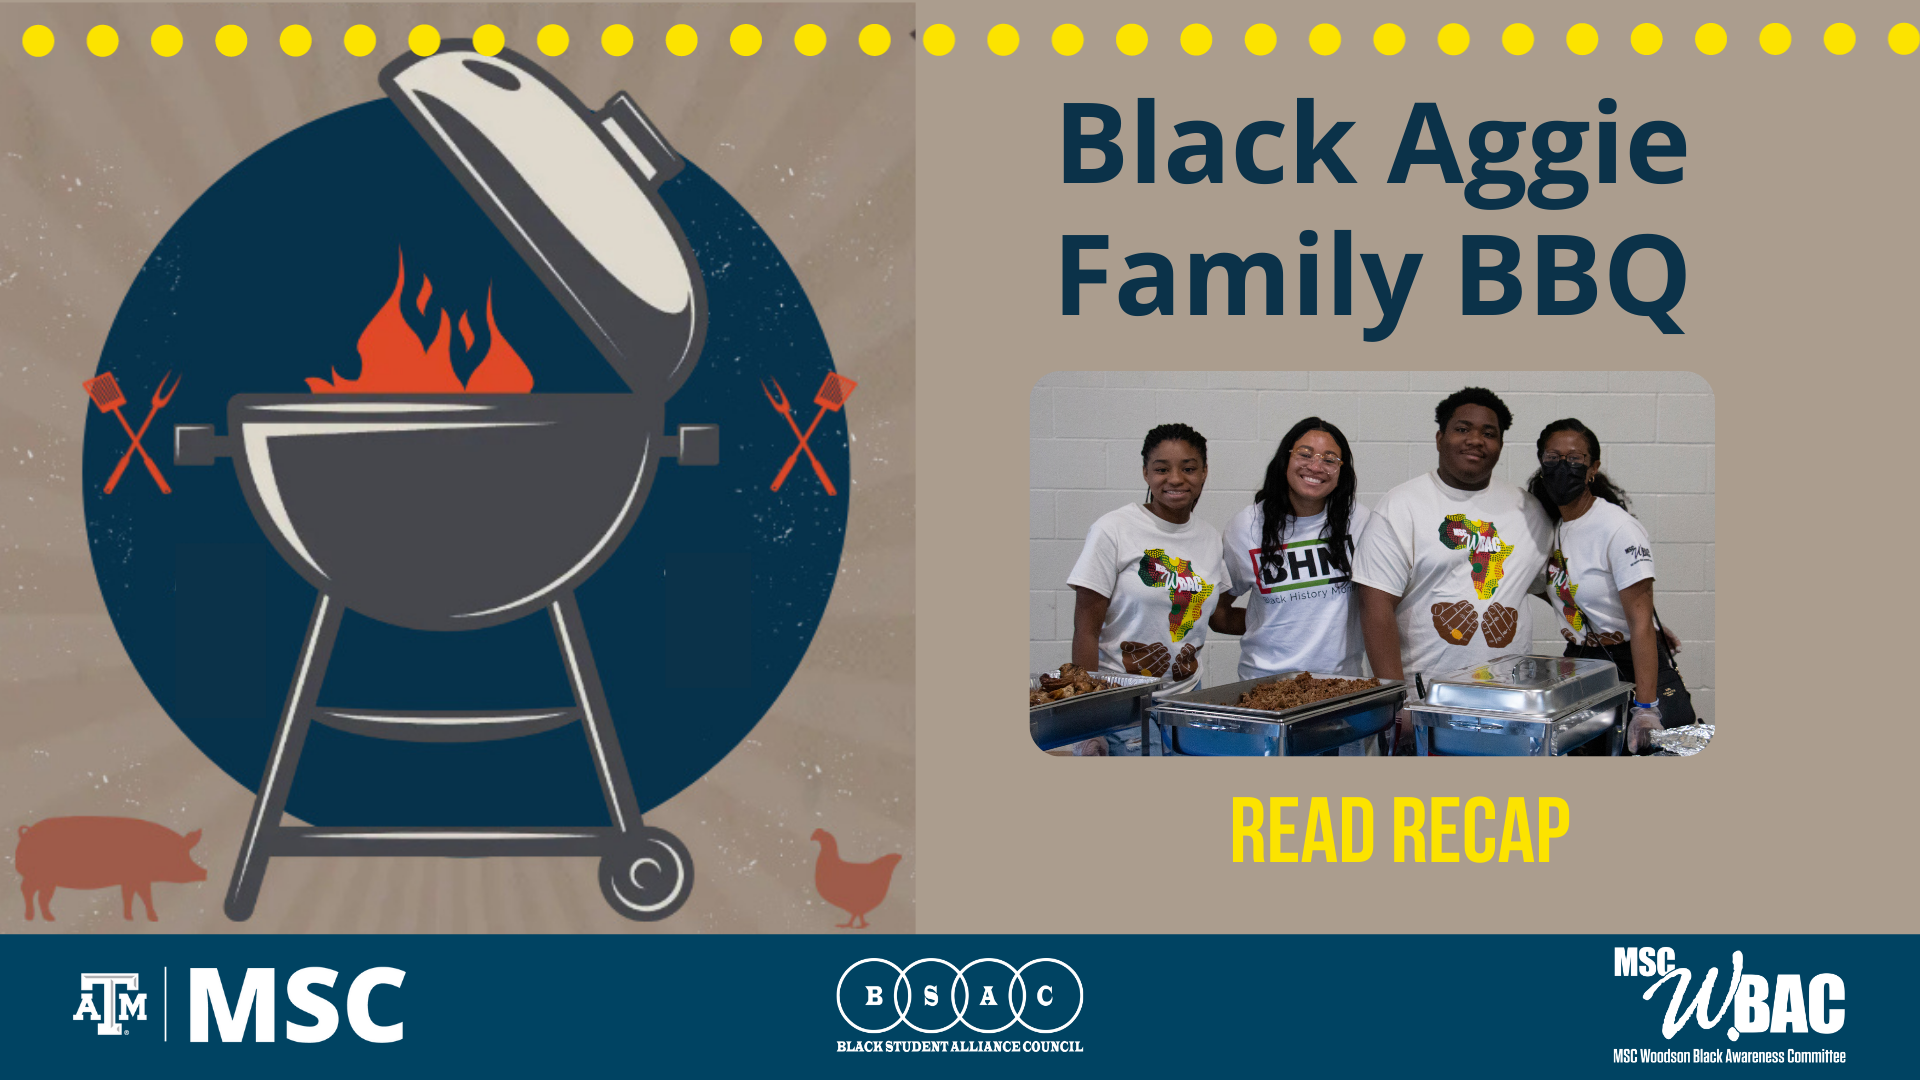 MSC WBAC and BSAC present Black Aggie Family BBQ, Read Recap